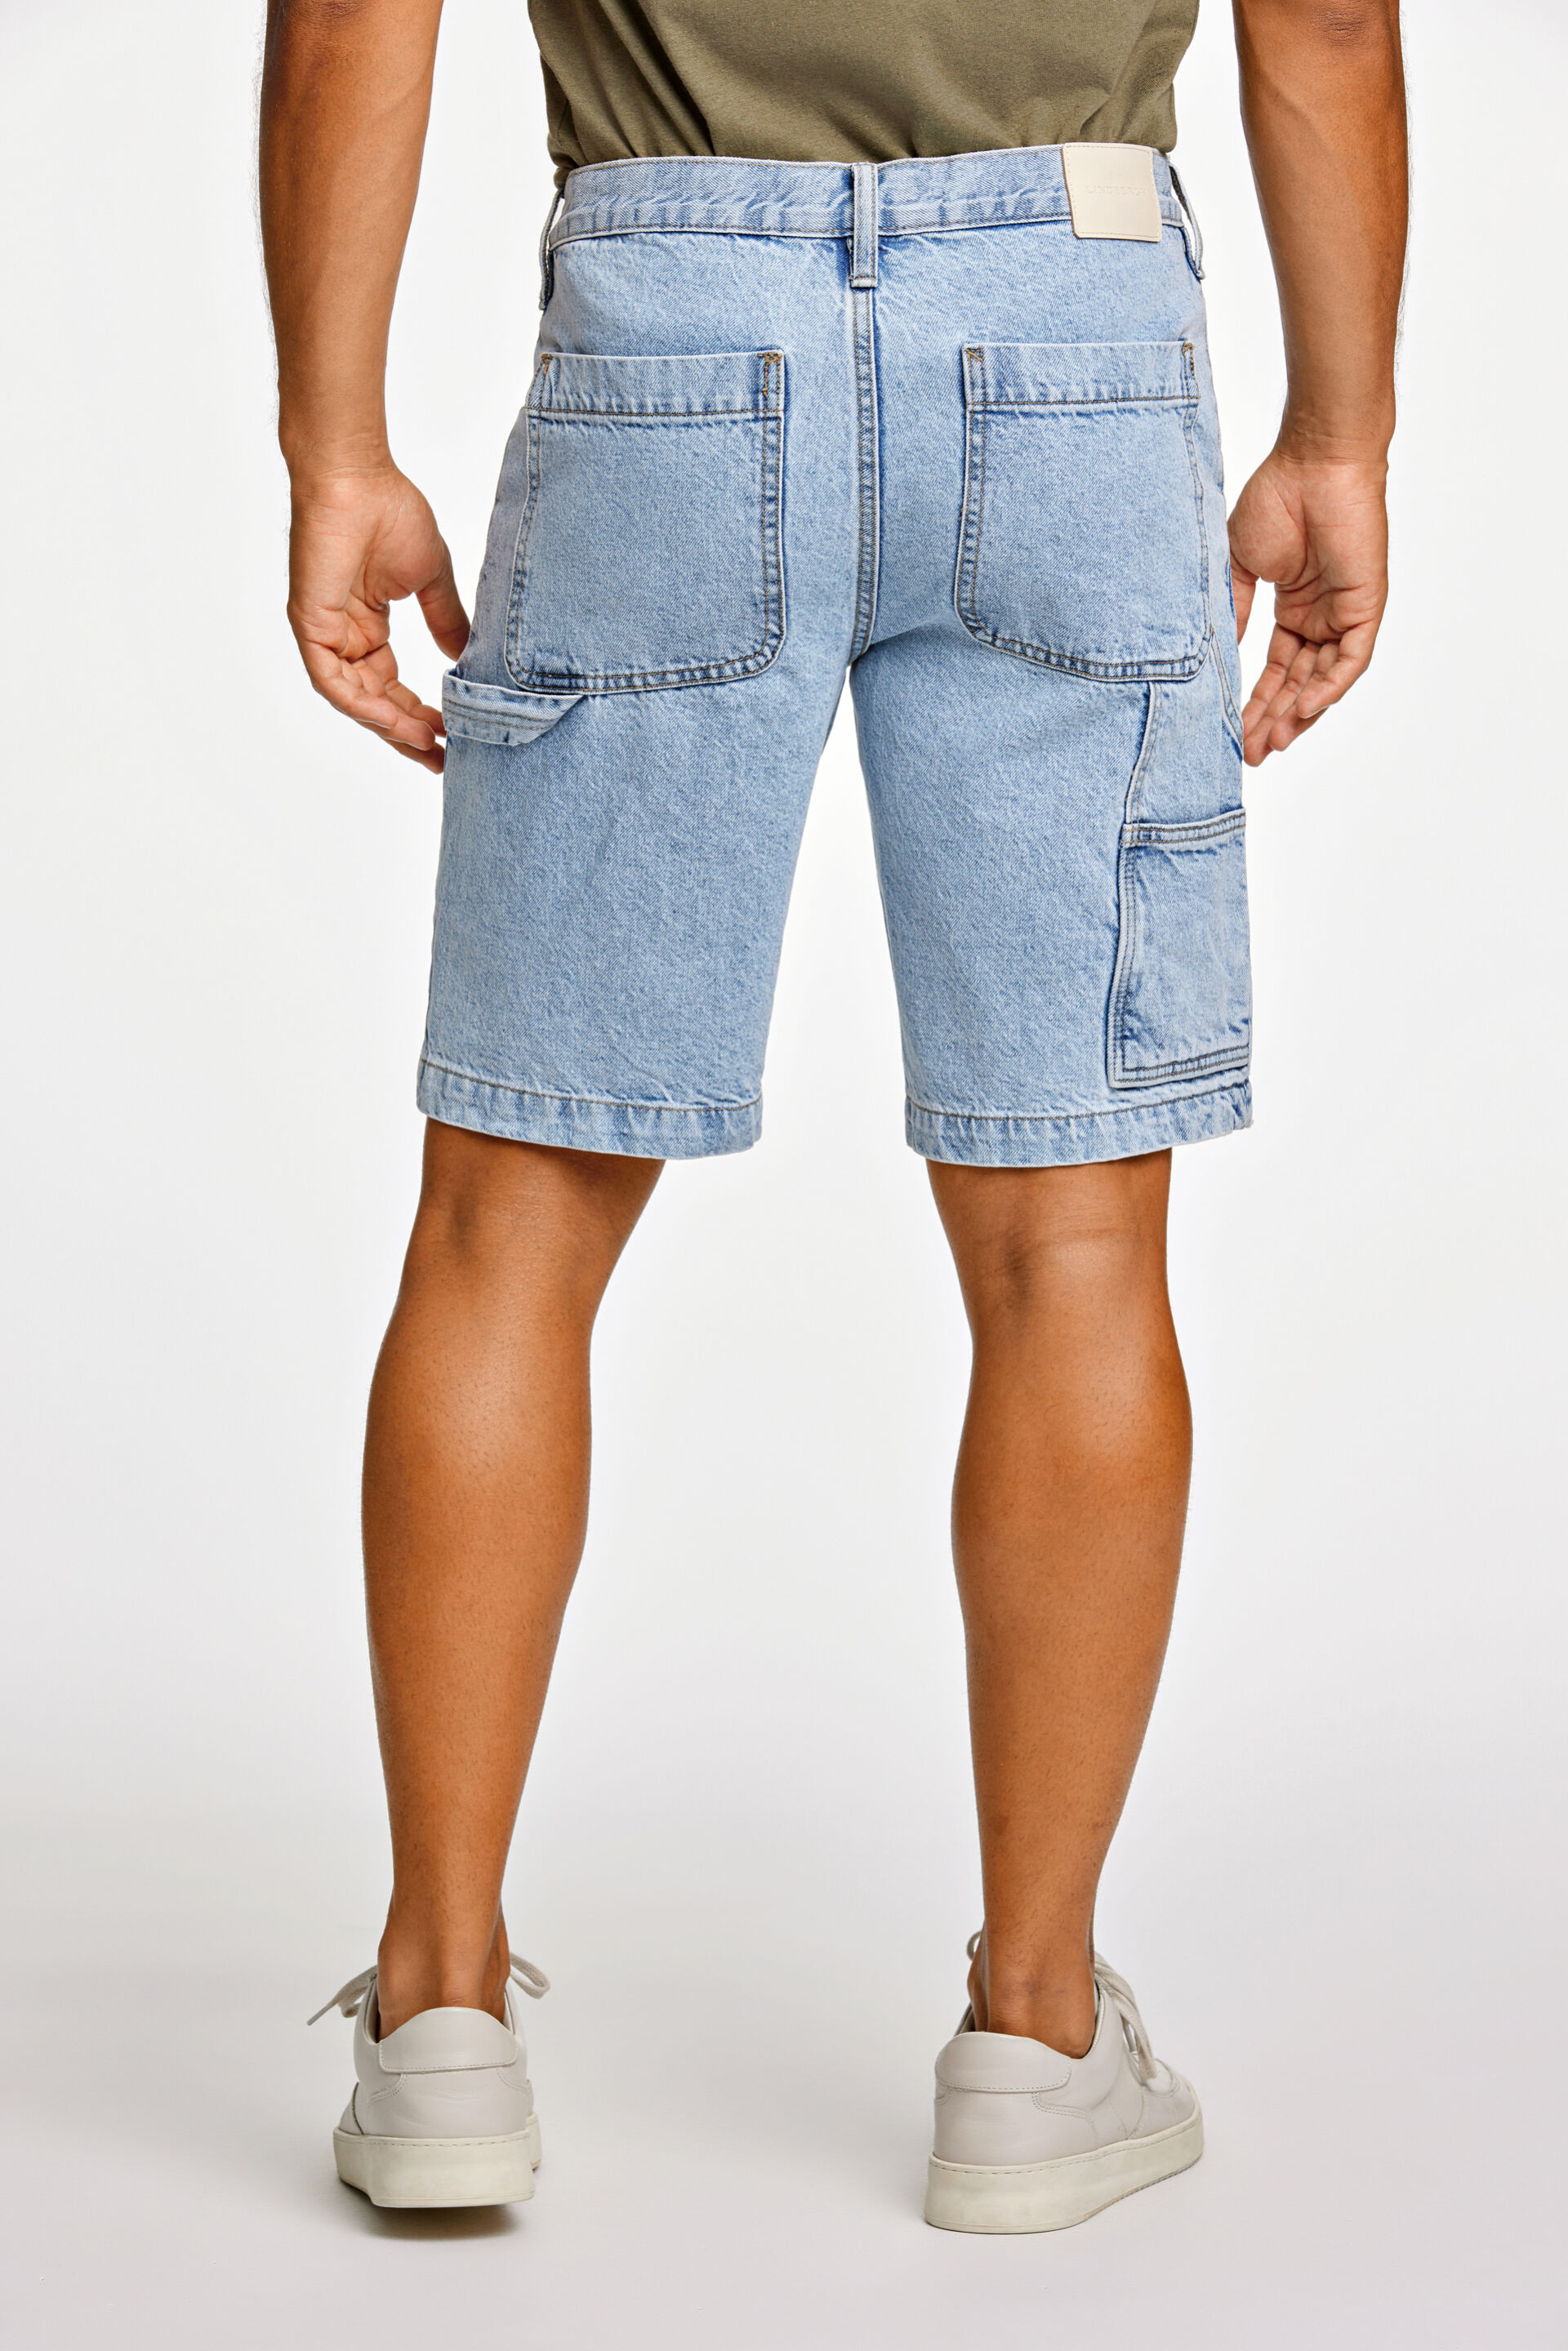 Jeans-Shorts 30-550005BLB